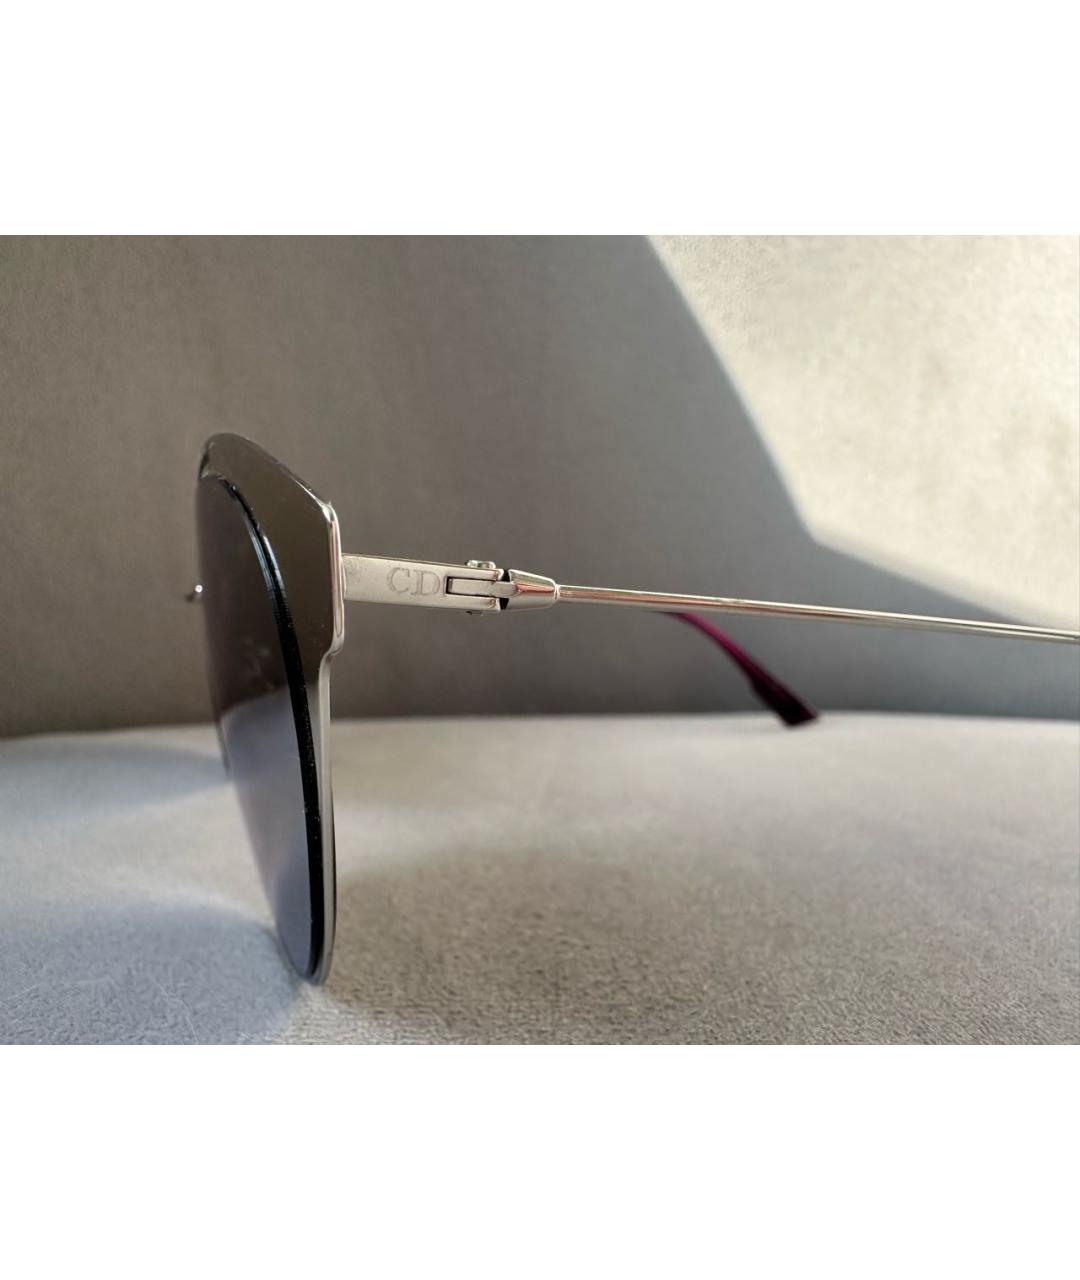 CHRISTIAN DIOR PRE-OWNED Серые металлические солнцезащитные очки, фото 3